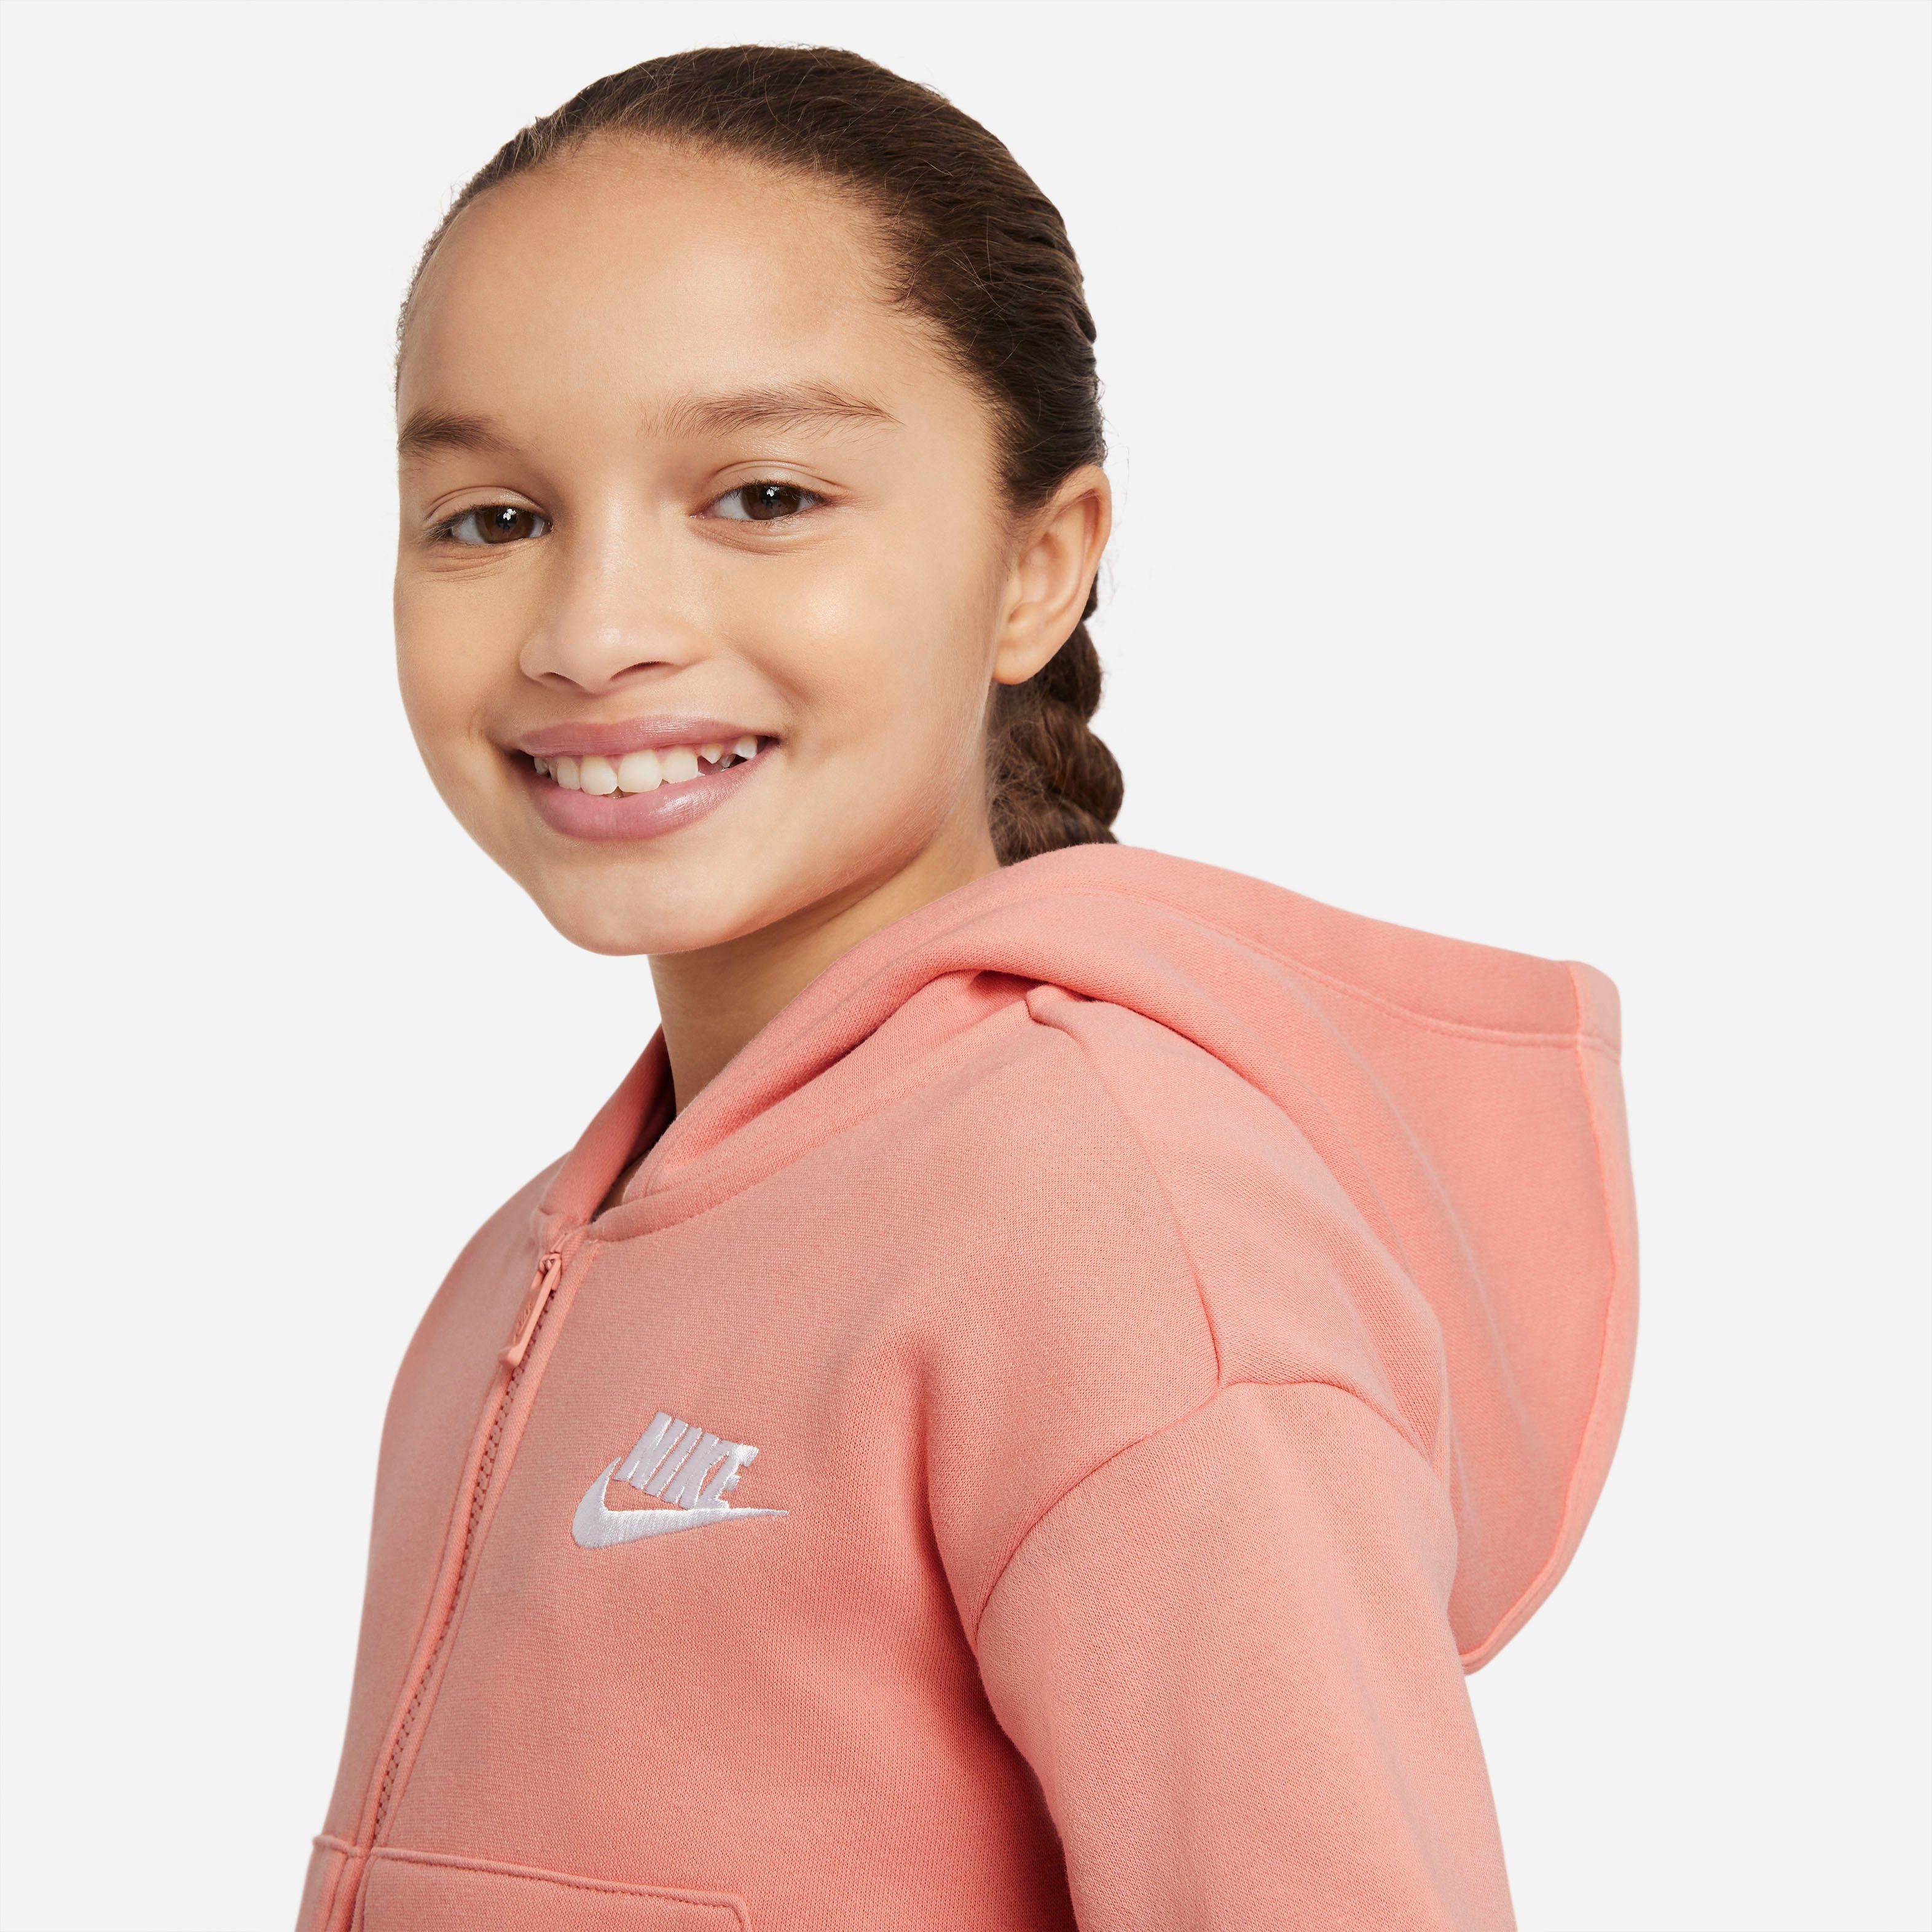 Nike Sportswear Kapuzensweatjacke »Club Fleece Big Kids' (Girls) Full-Zip  Hoodie« online kaufen | OTTO